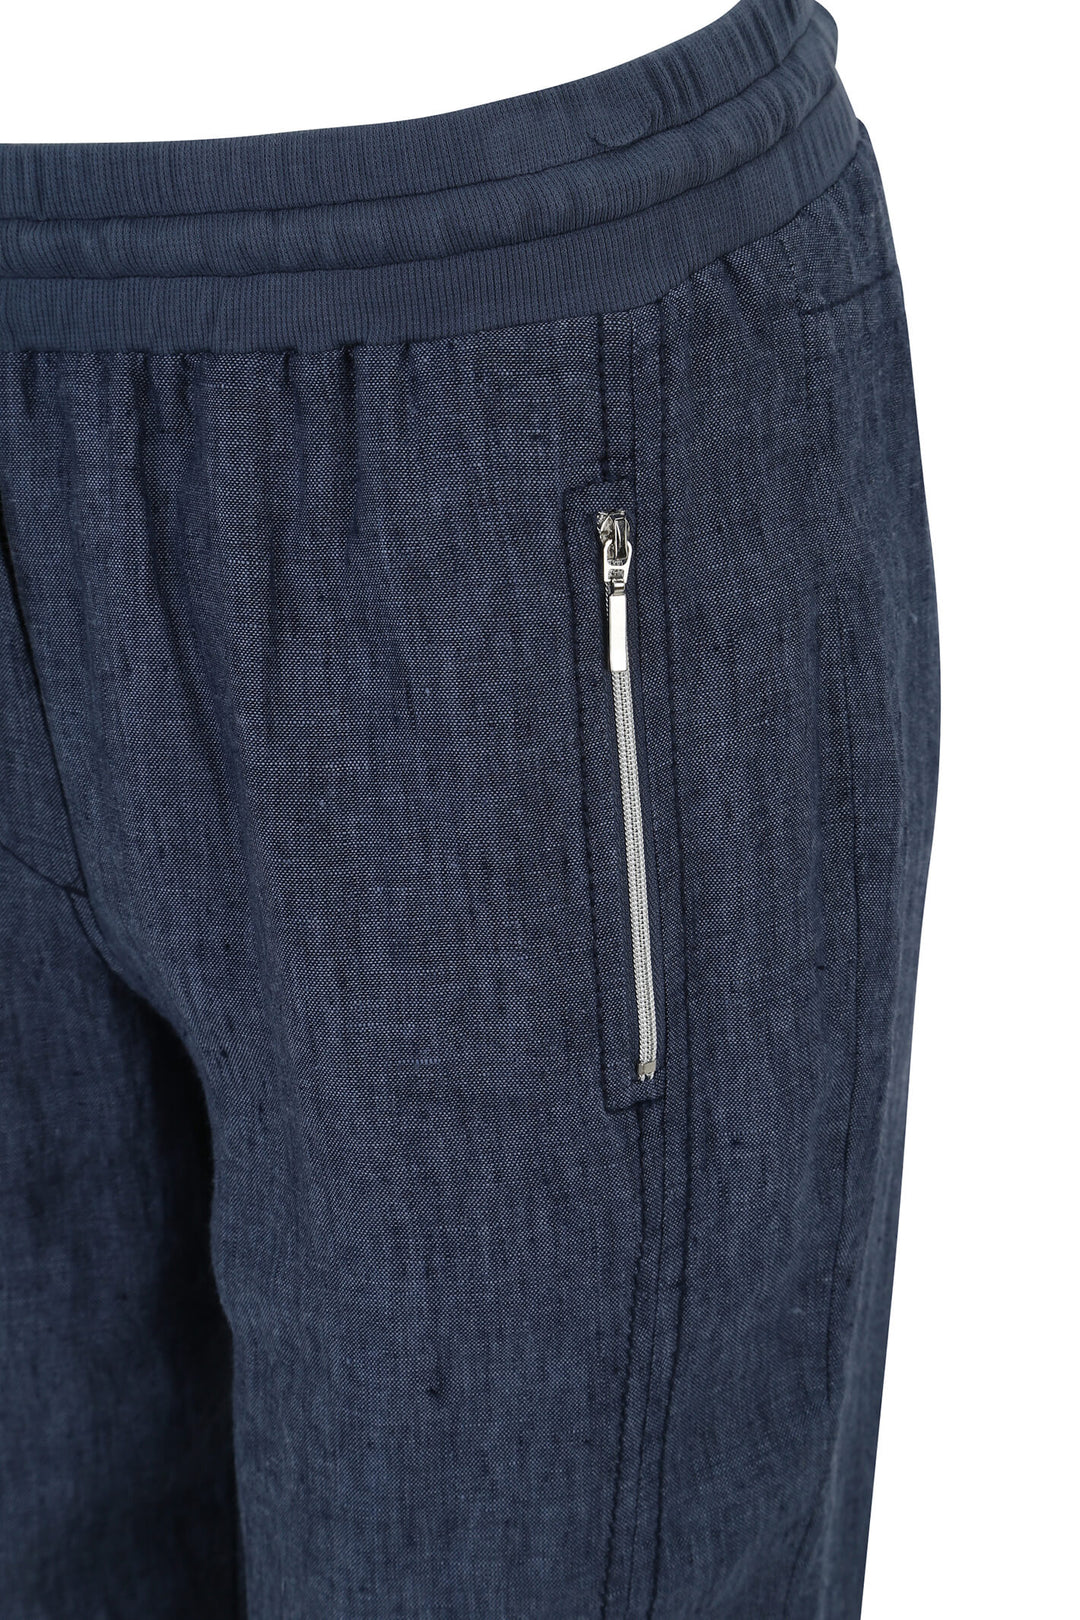 Doris Streich 854 135 Navy Blue Linen Full Length Pull-On Trousers - Shirley Allum Boutique